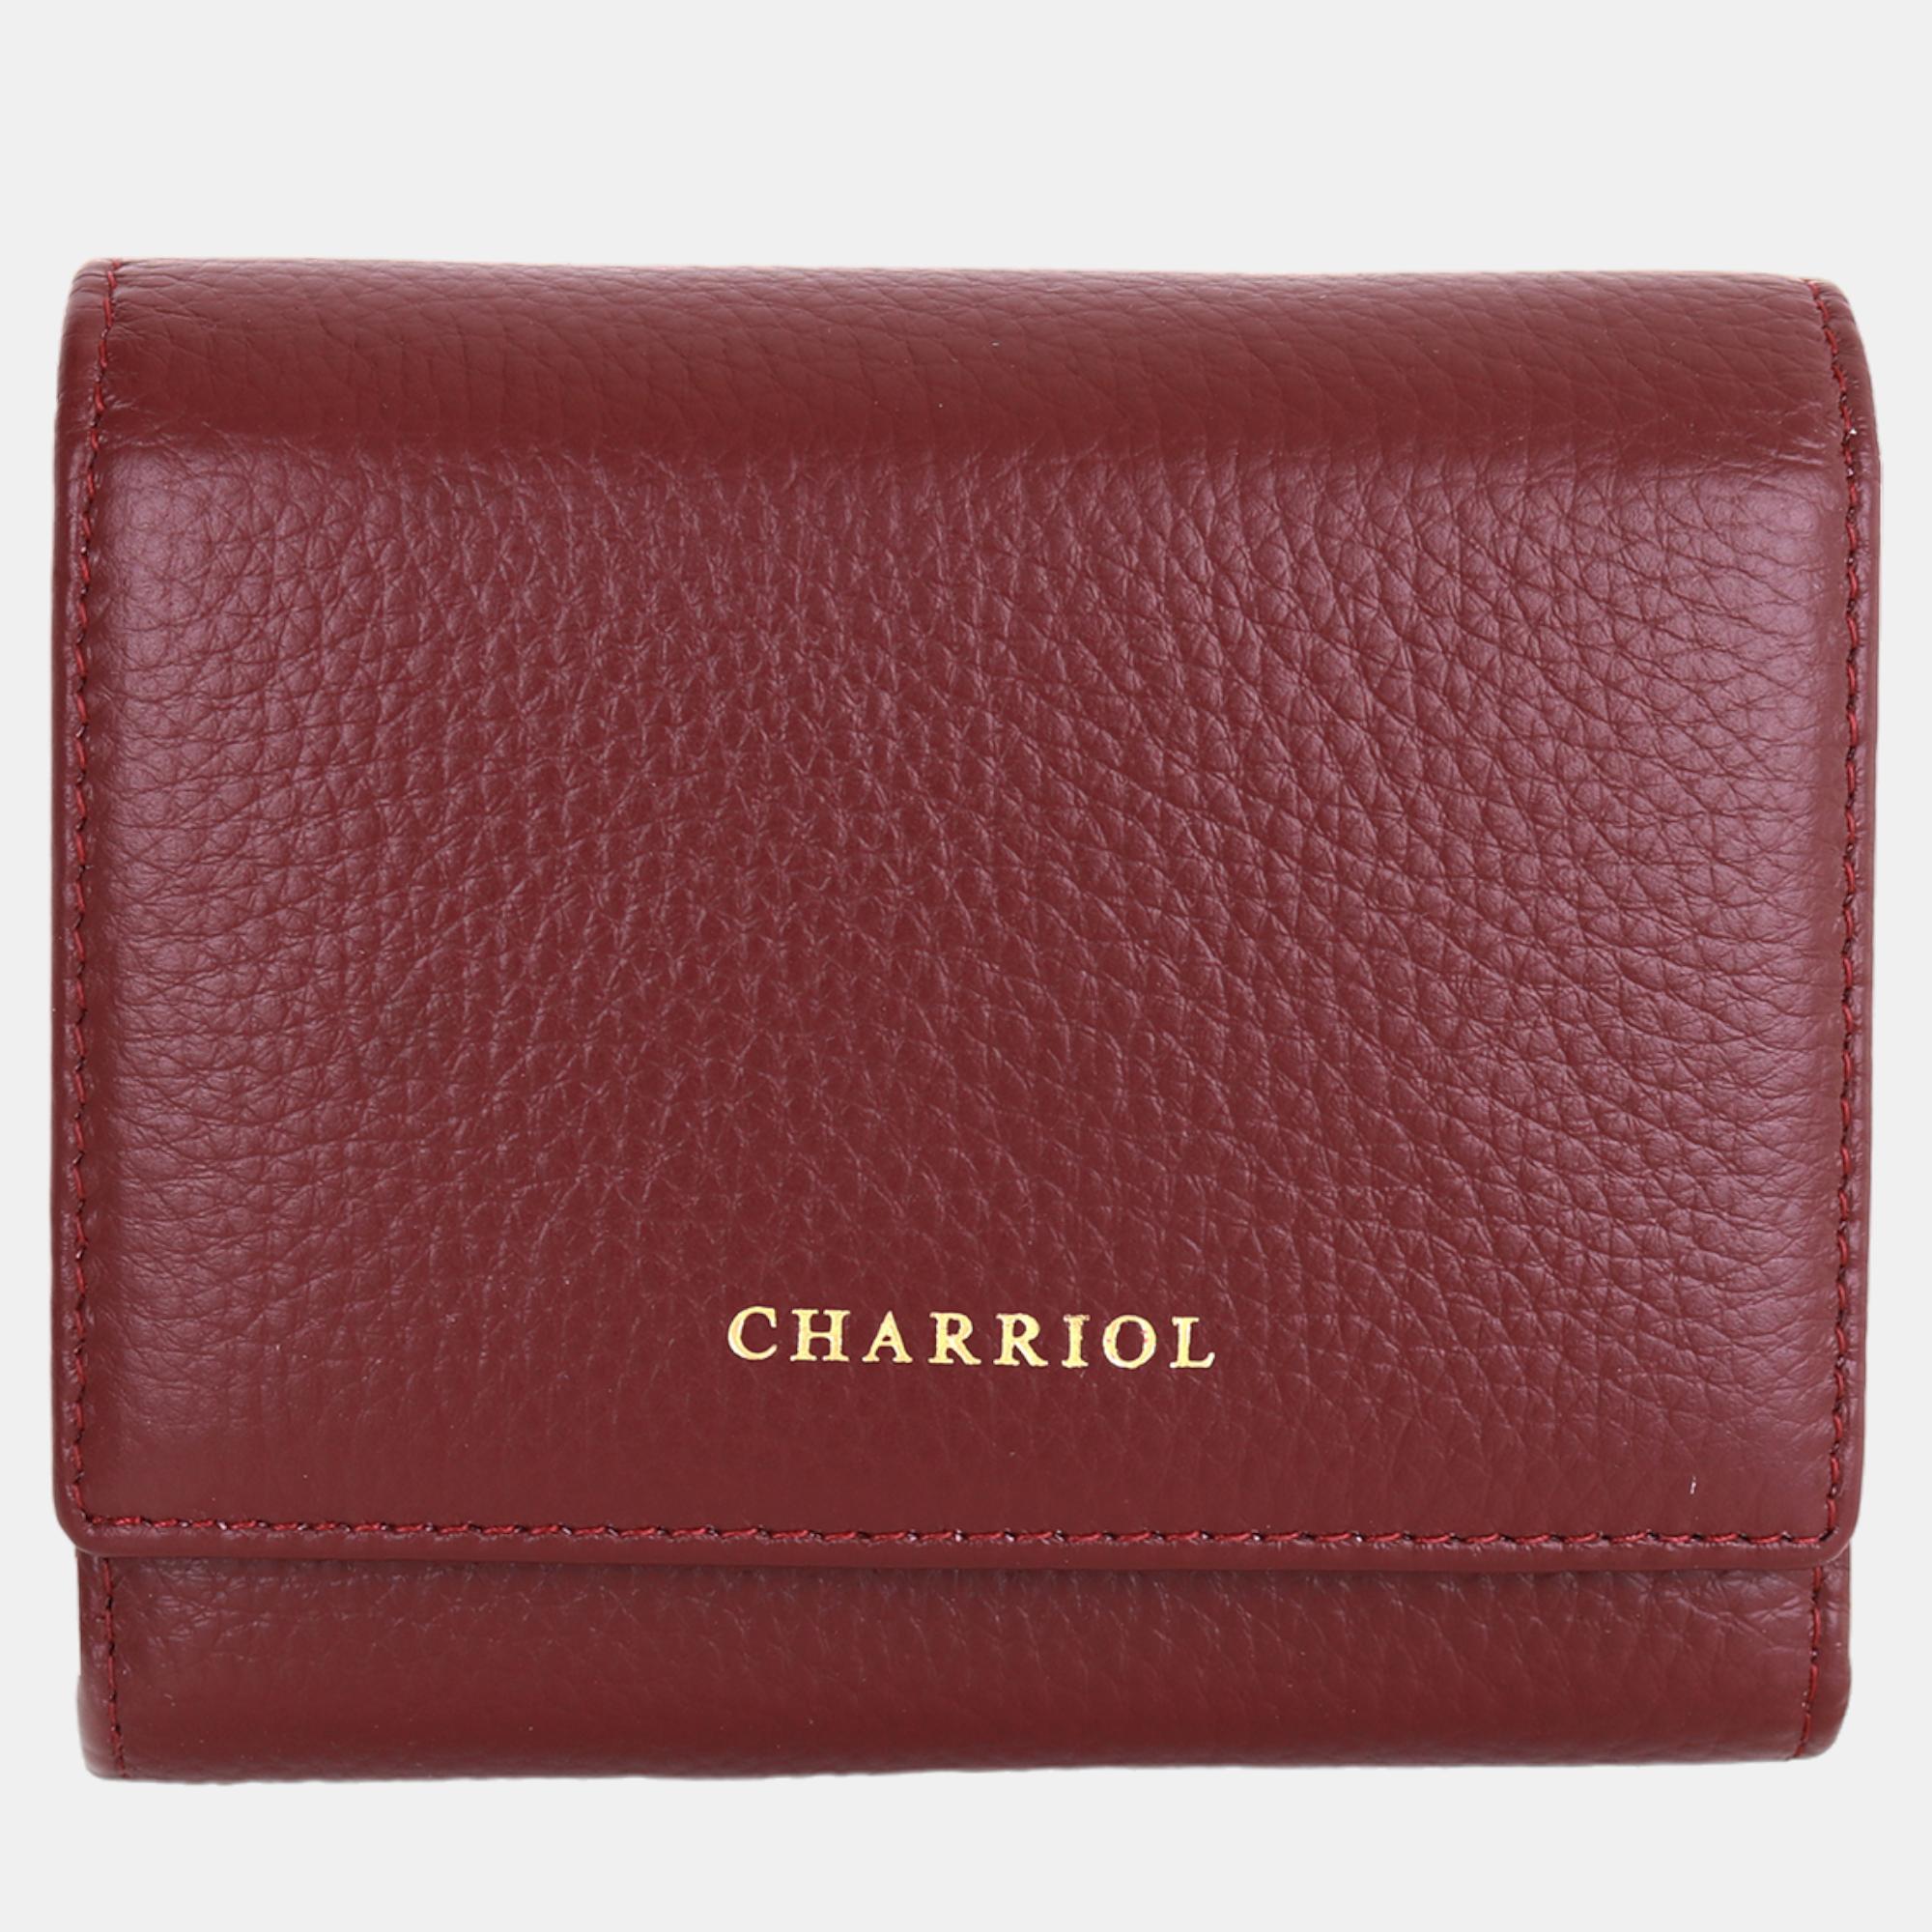 Charriol Bordeaux Leather  Wallet